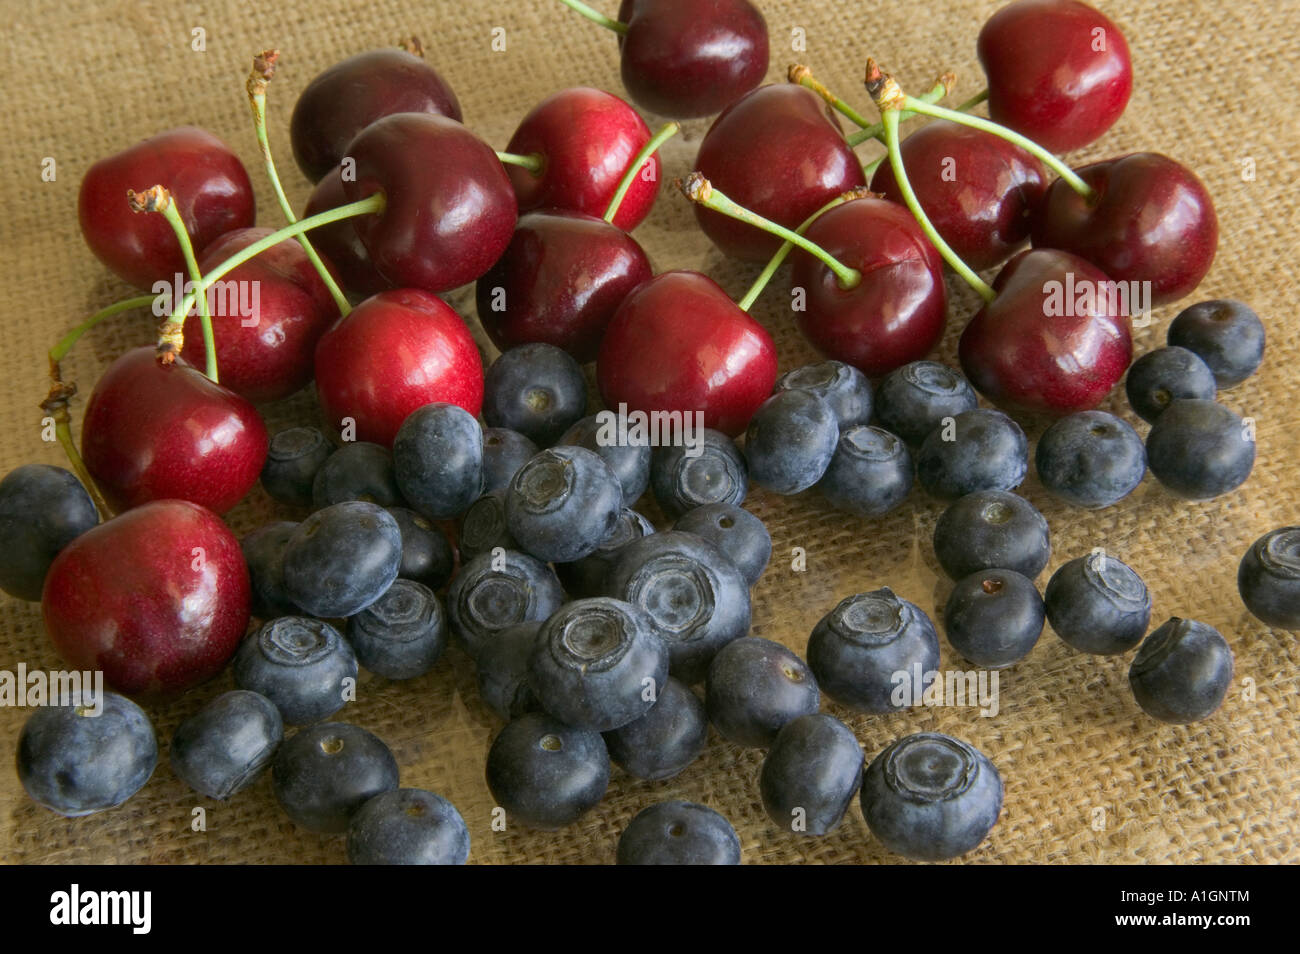 Bing Cherries and Blueberries, on burlap. Stock Photo